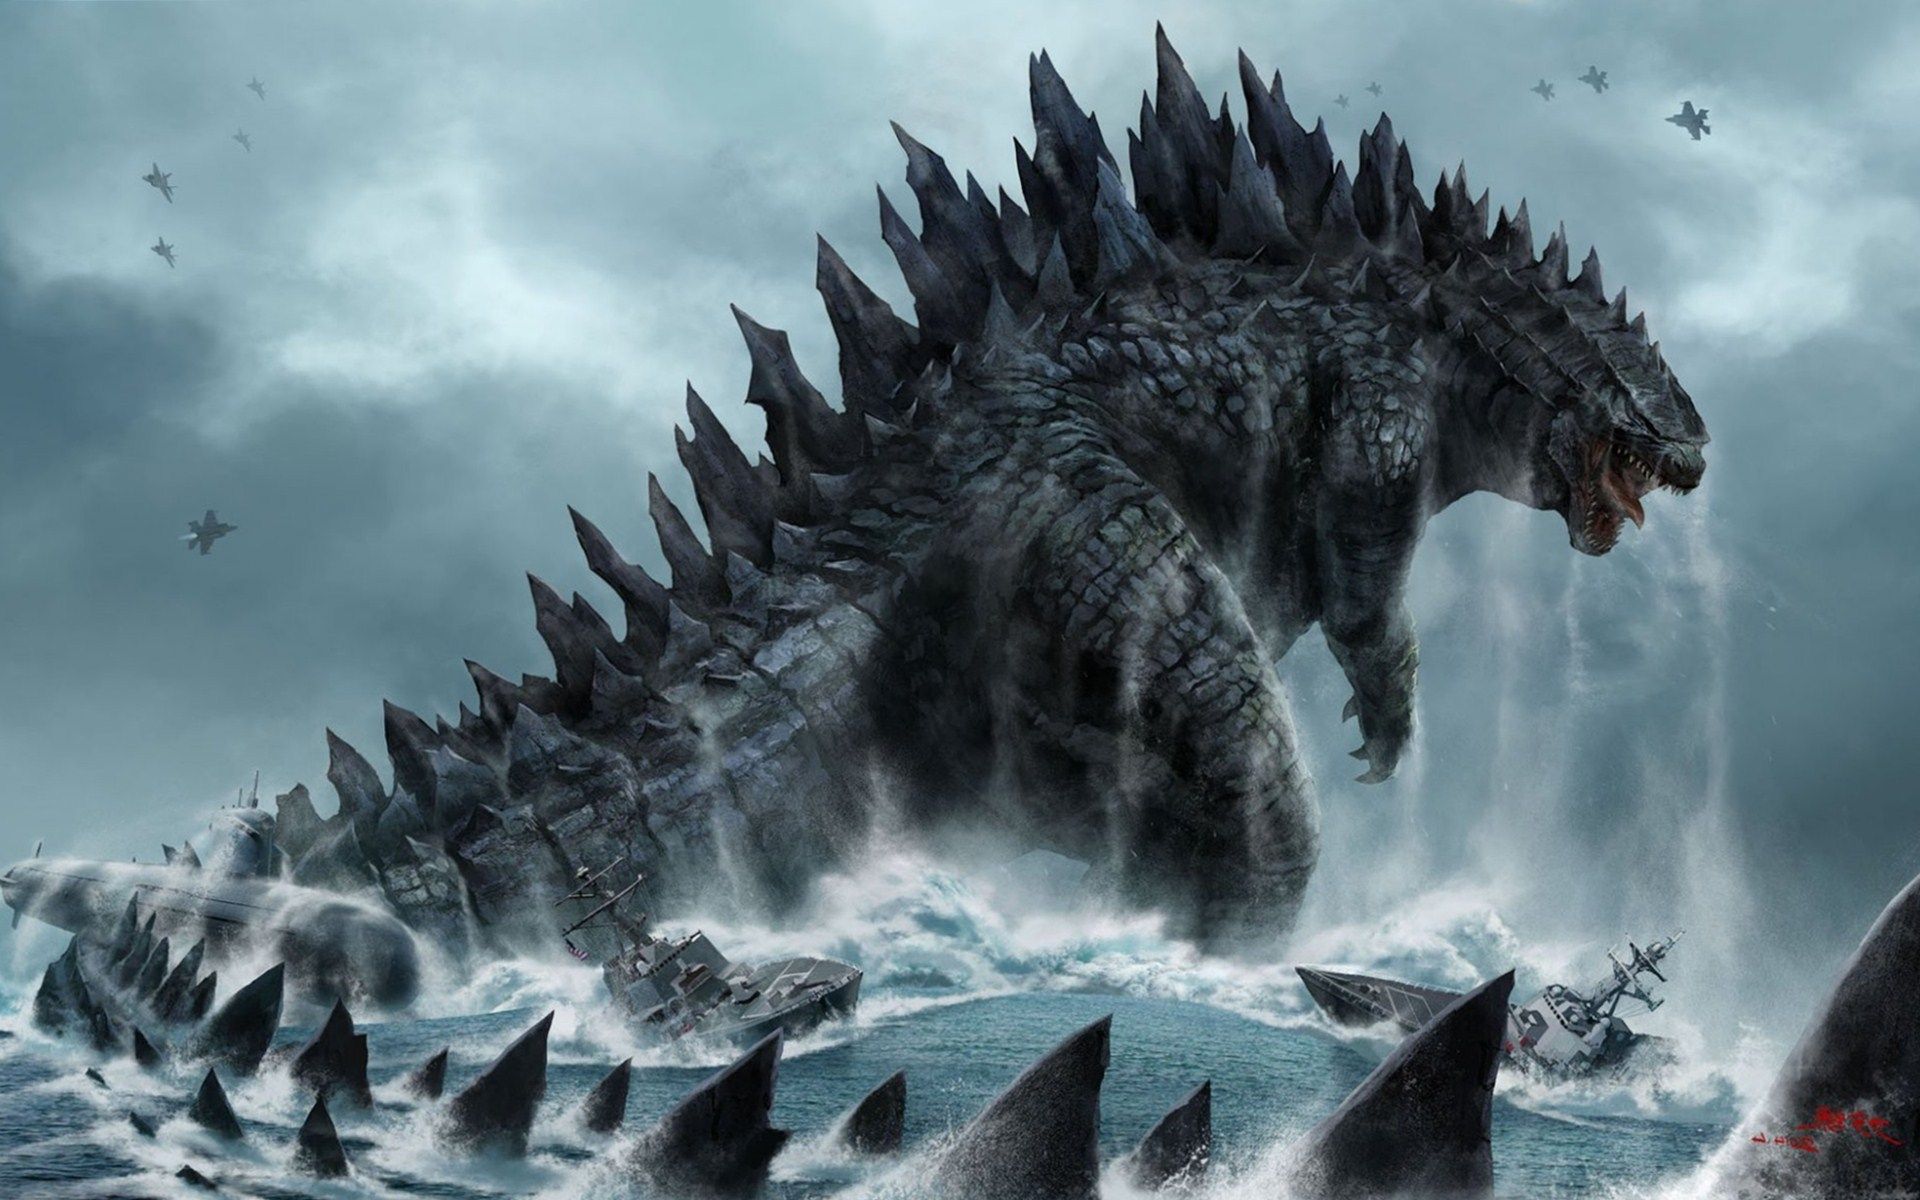 HD wallpaper: King Kong Vs Godzilla Artwork | Wallpaper Flare